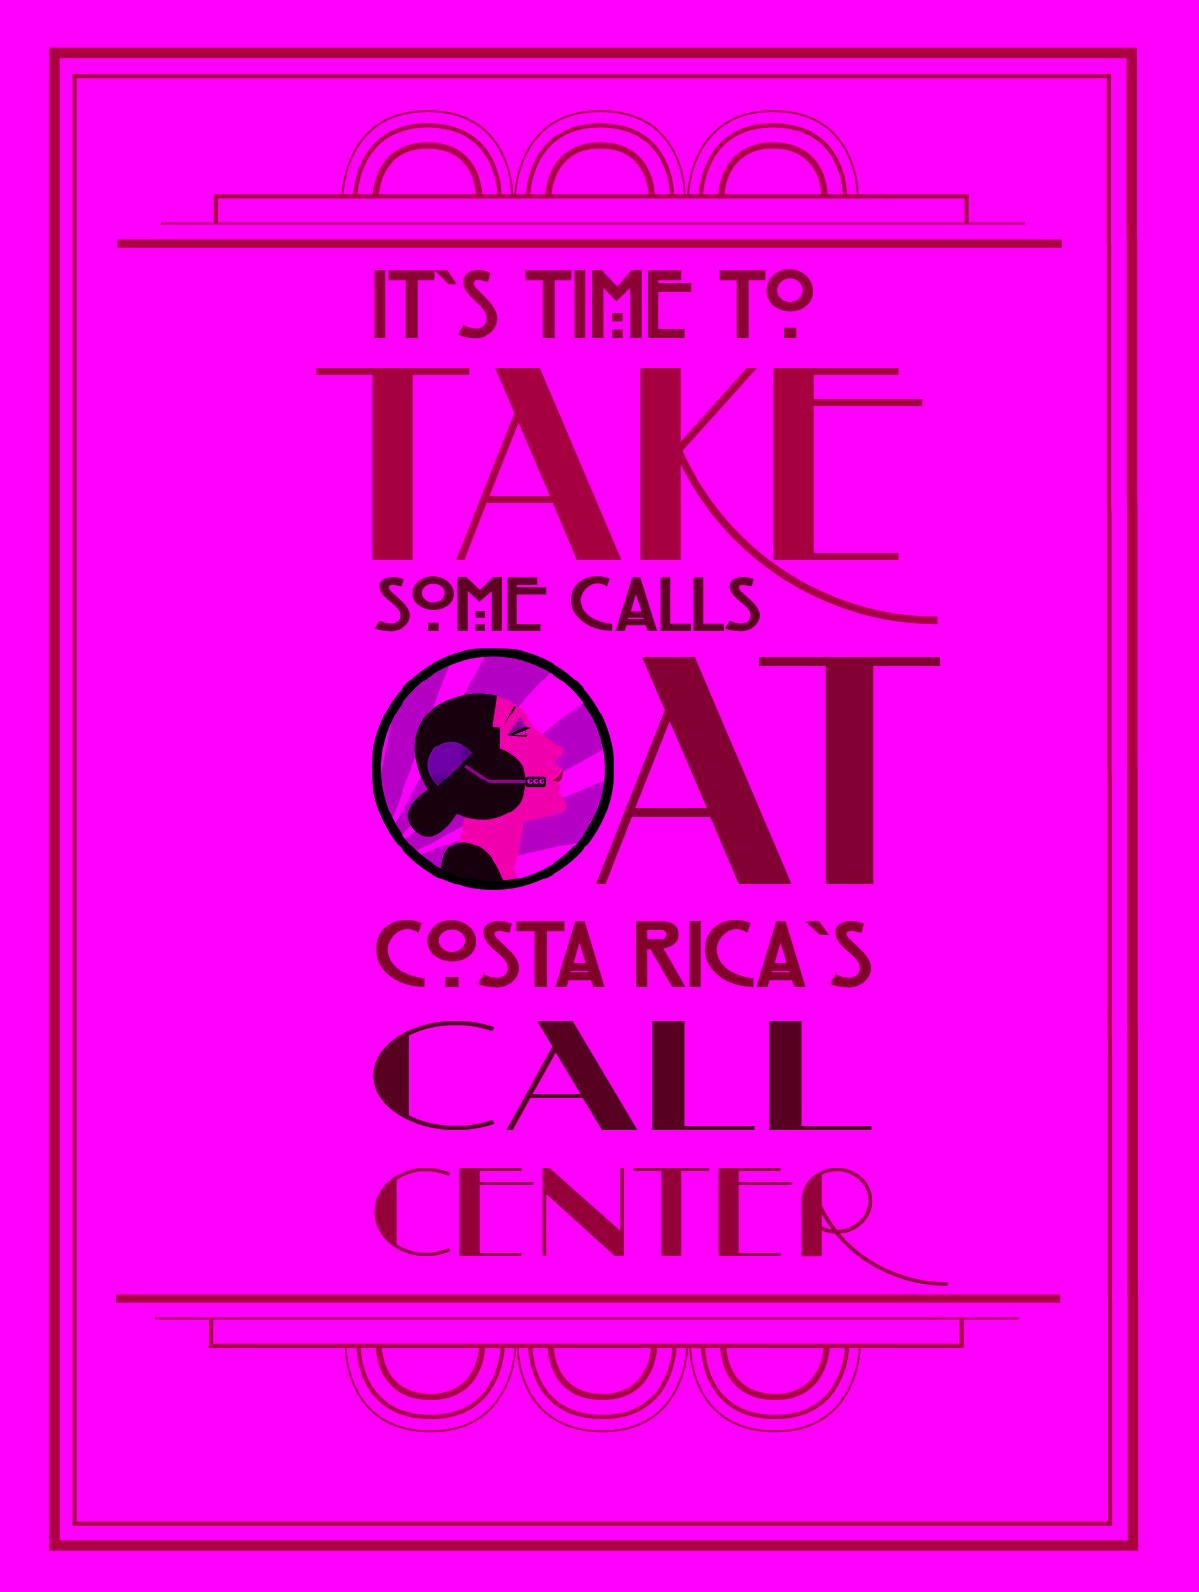 CALL CENTRE REPRESENTATIVE COSTA RICA.jpg  by richardblank